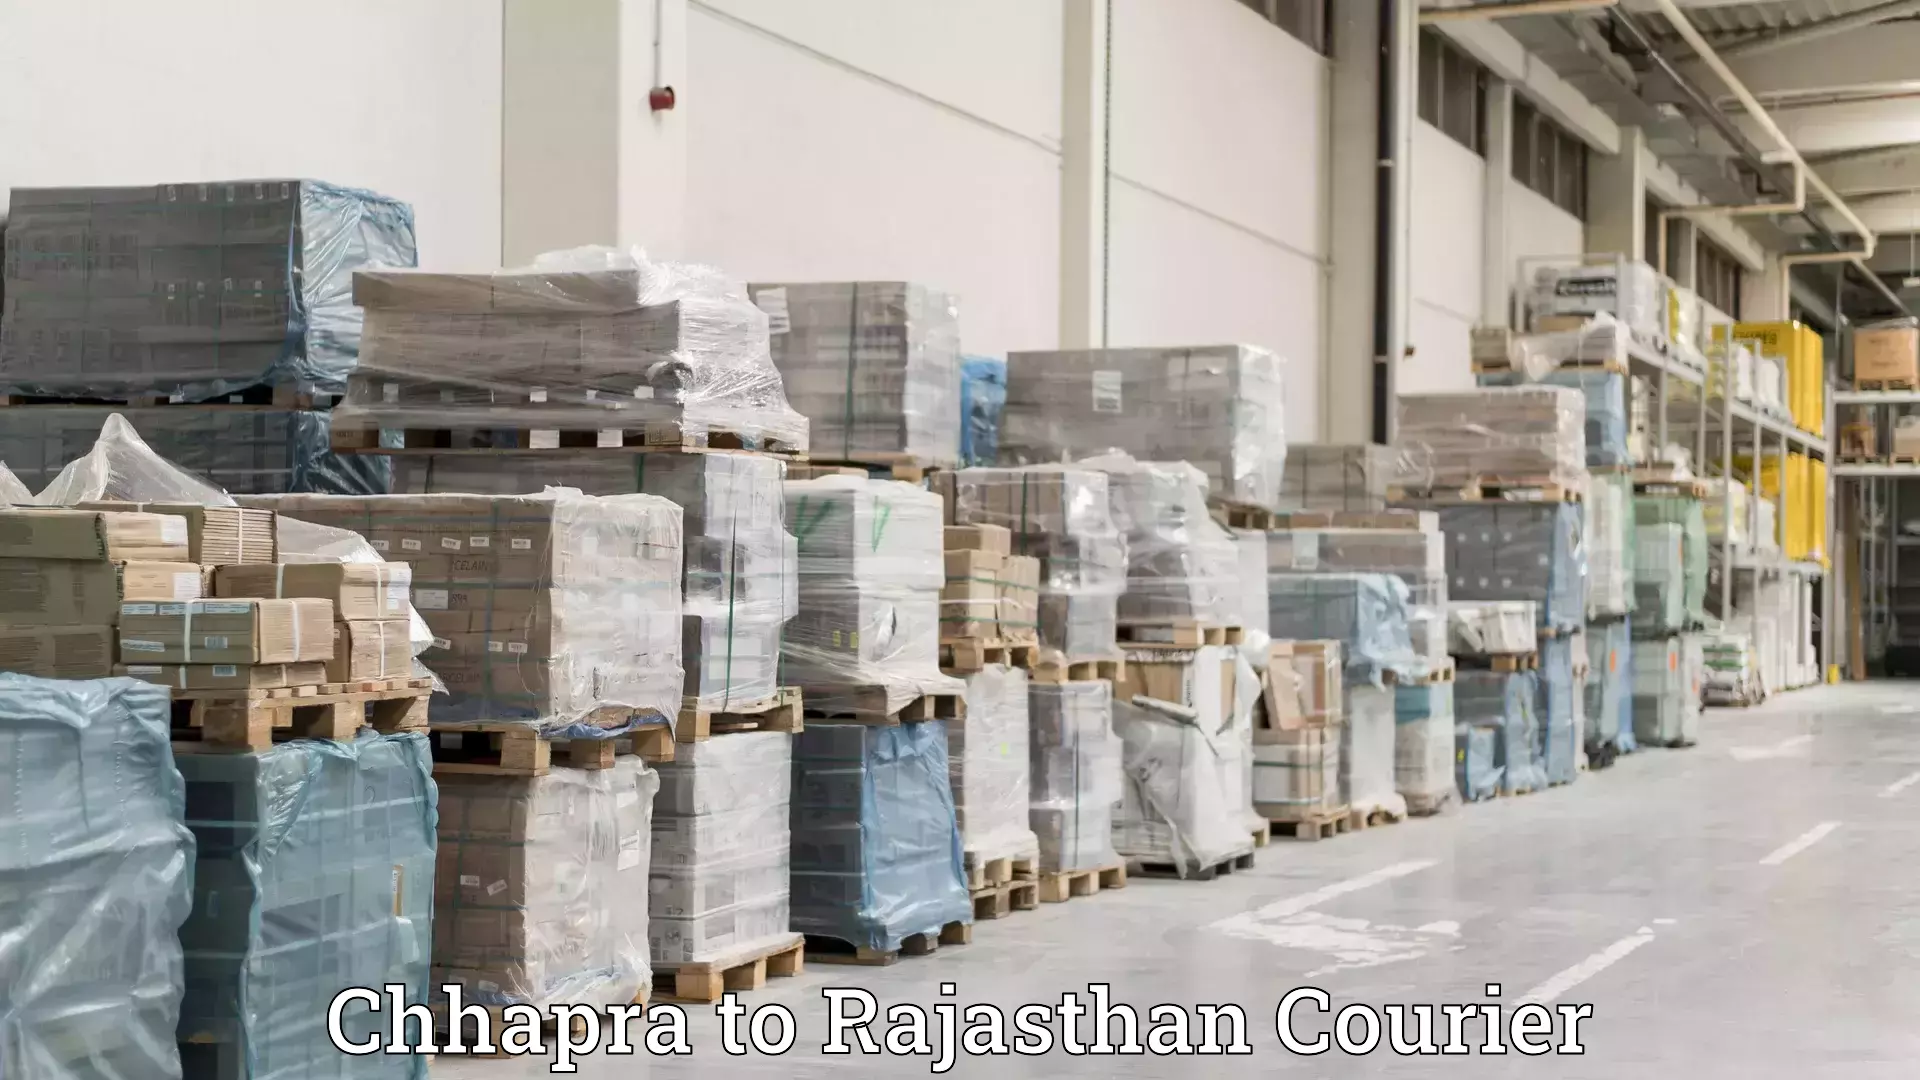 Professional moving company Chhapra to Rajasthan